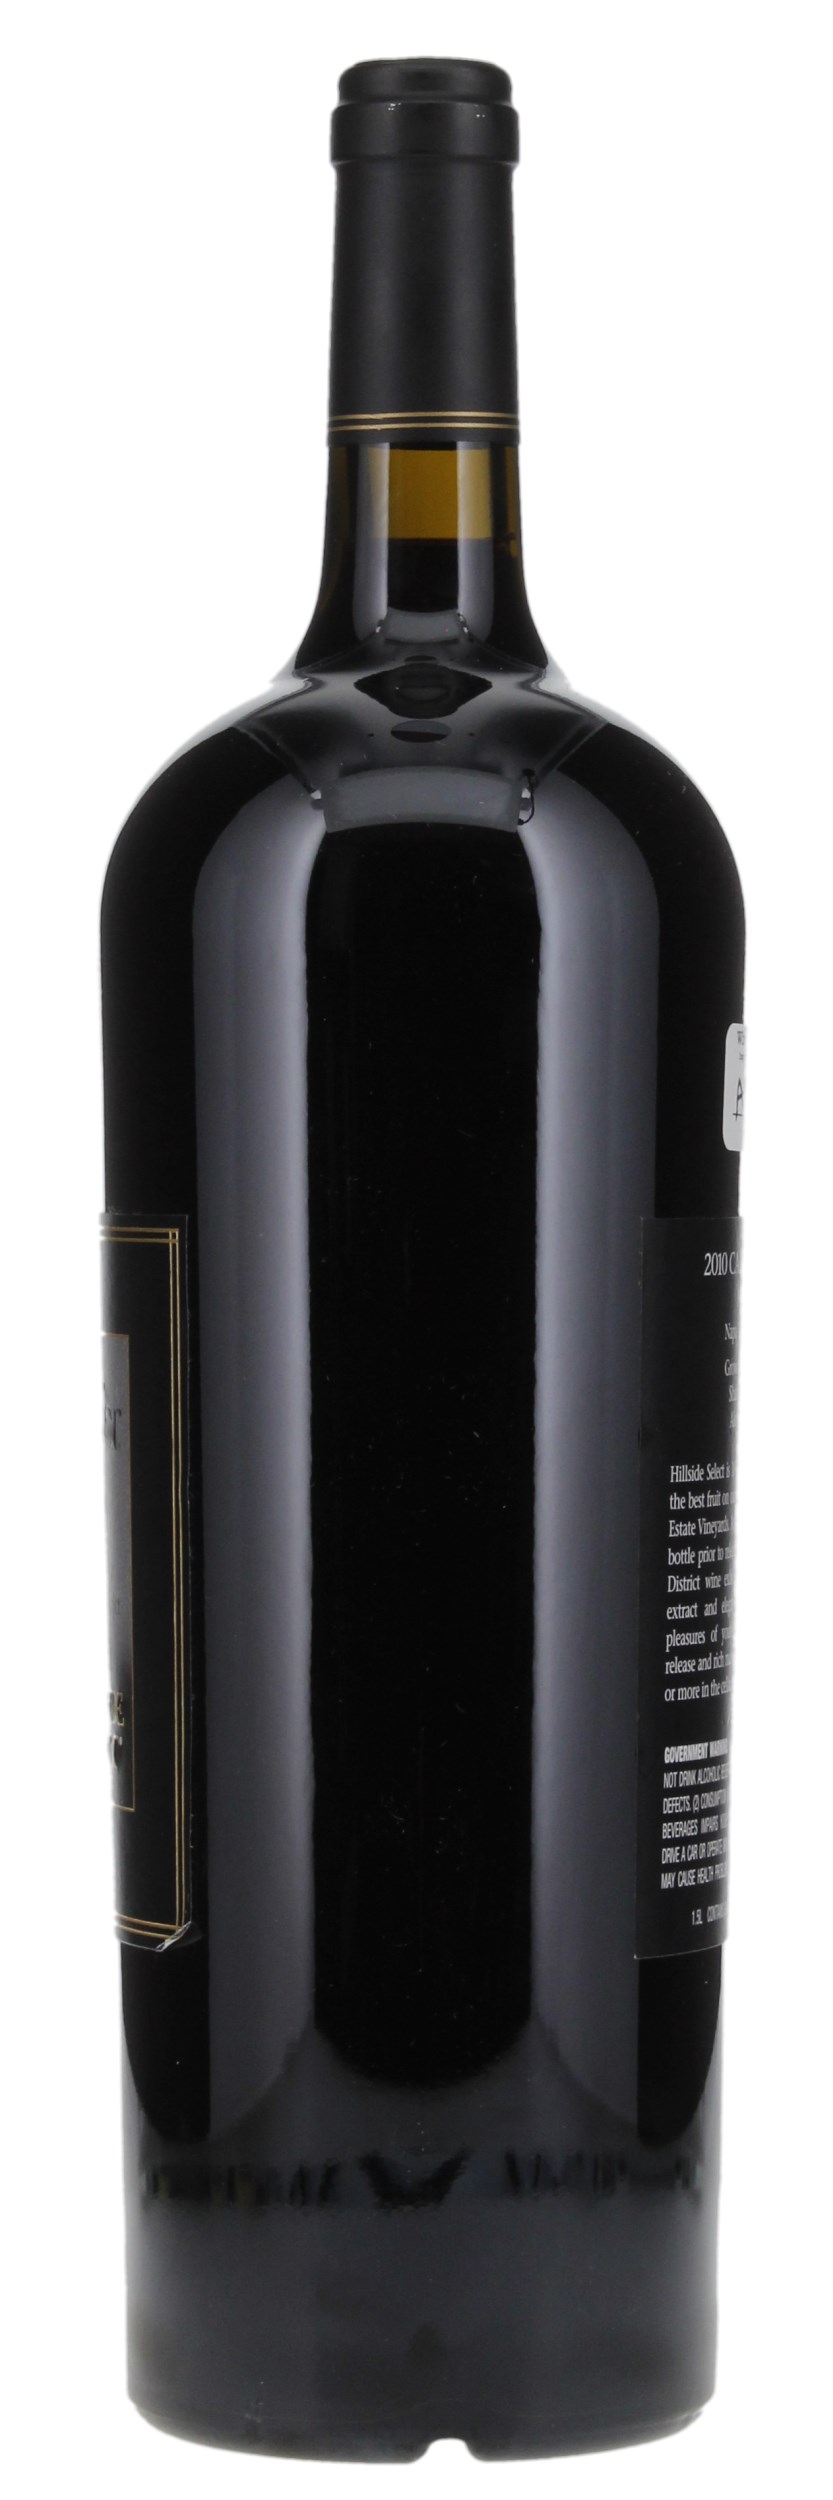 2010 Shafer Vineyards Hillside Select Cabernet Sauvignon, 1.5ltr